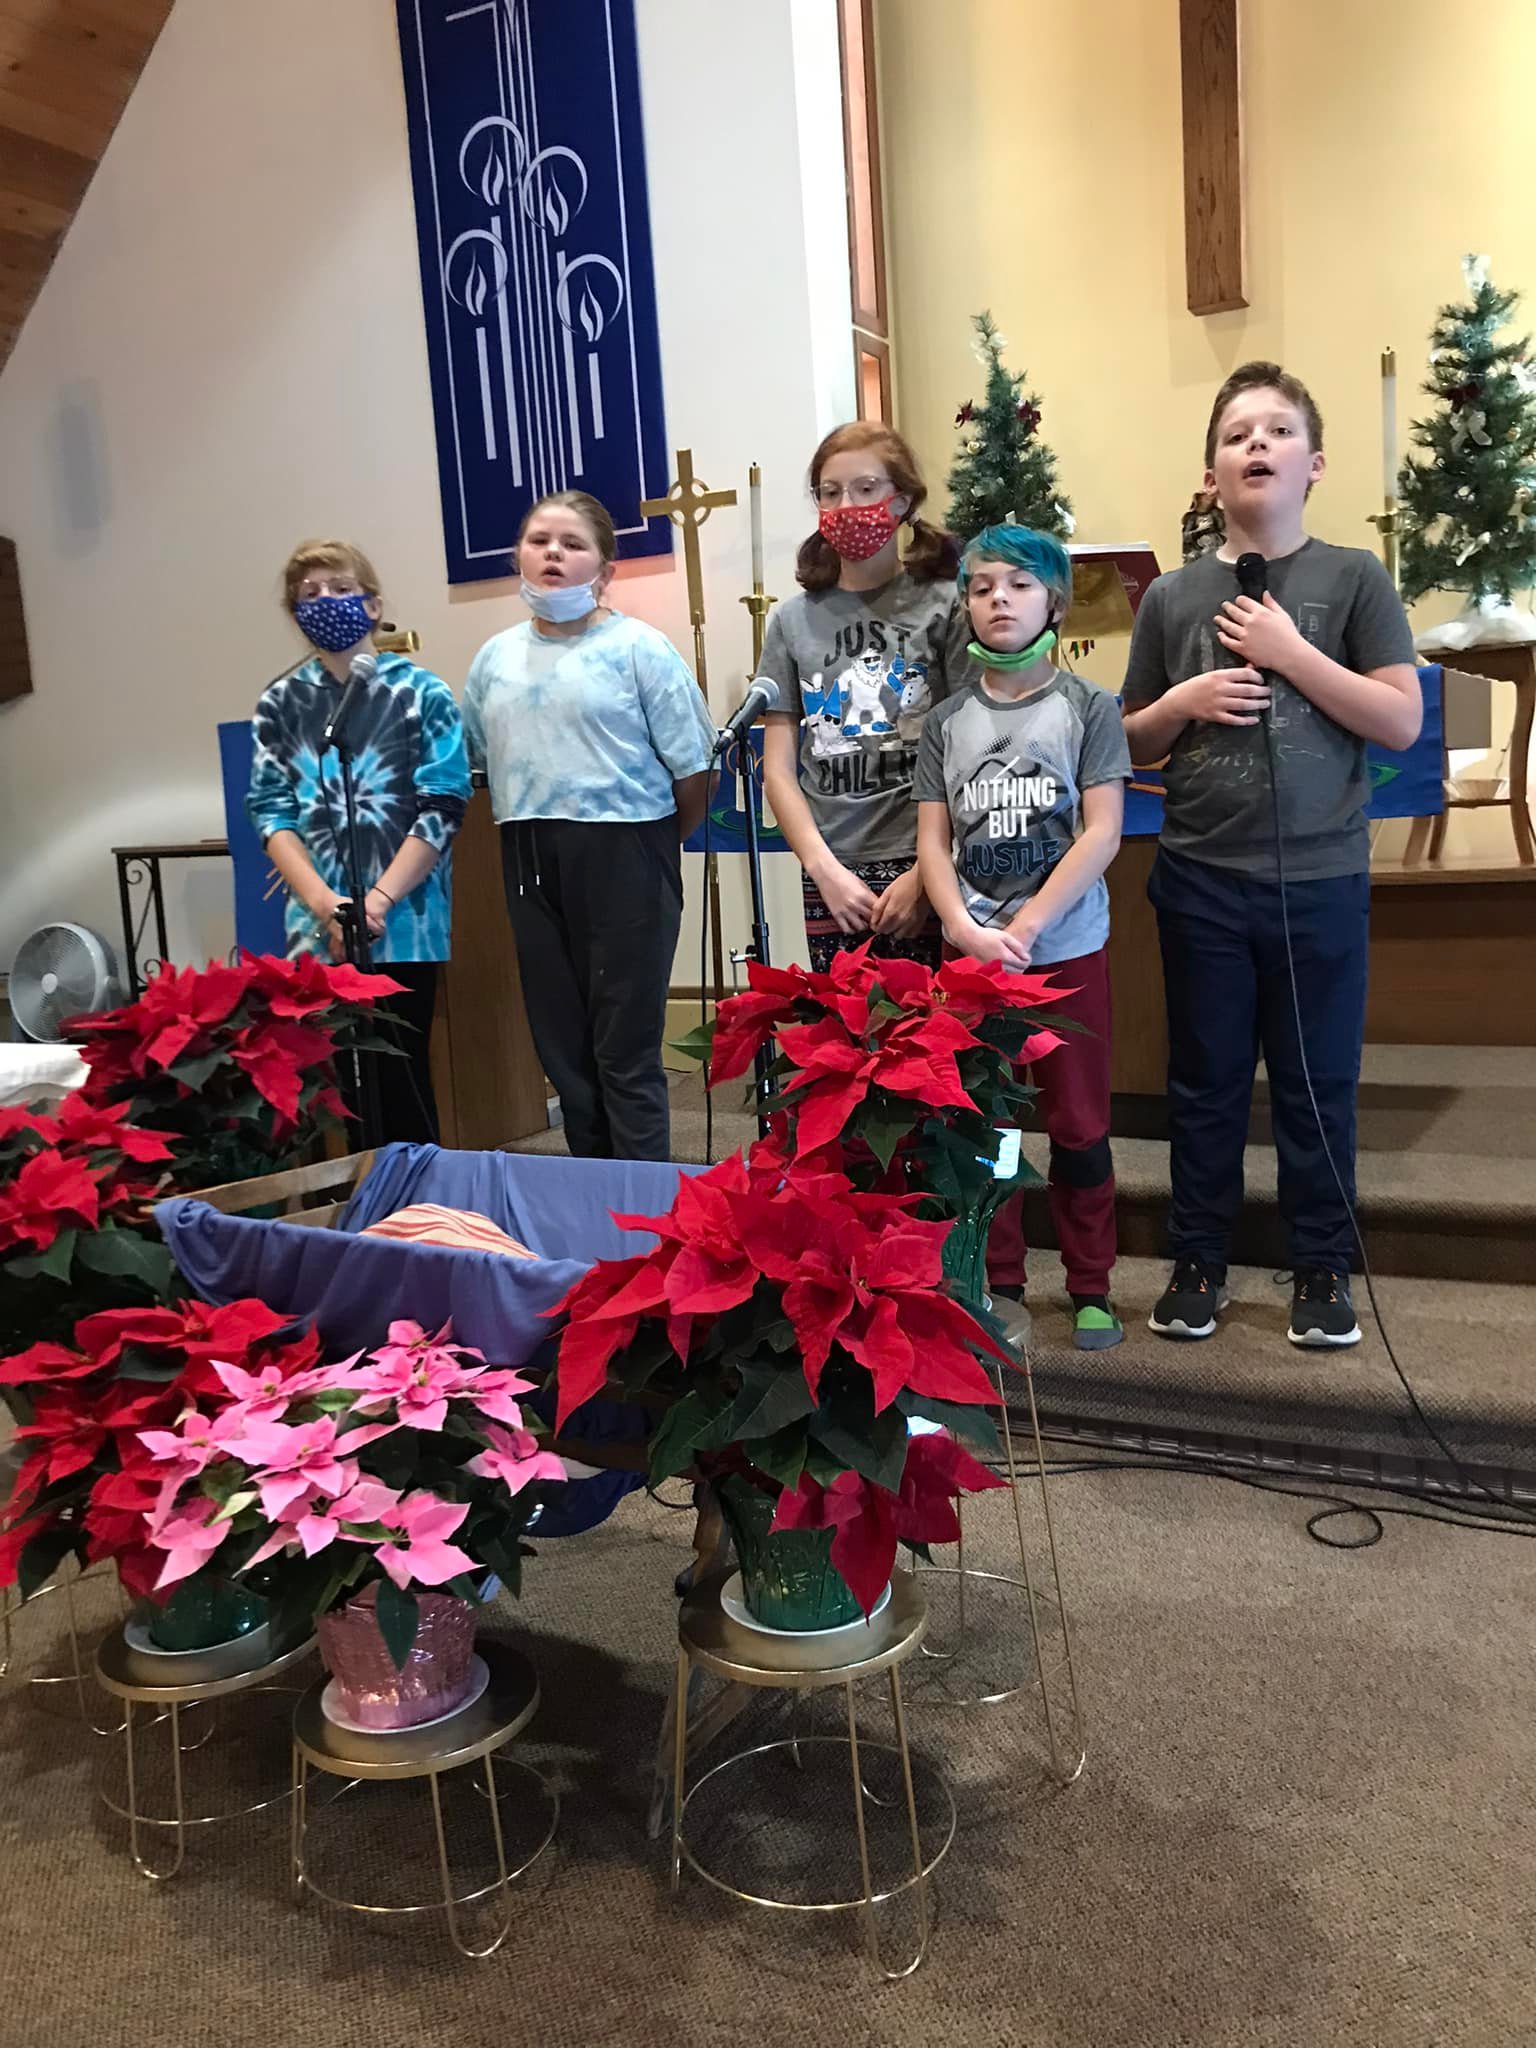 Children's Christmas program choir with manger display.